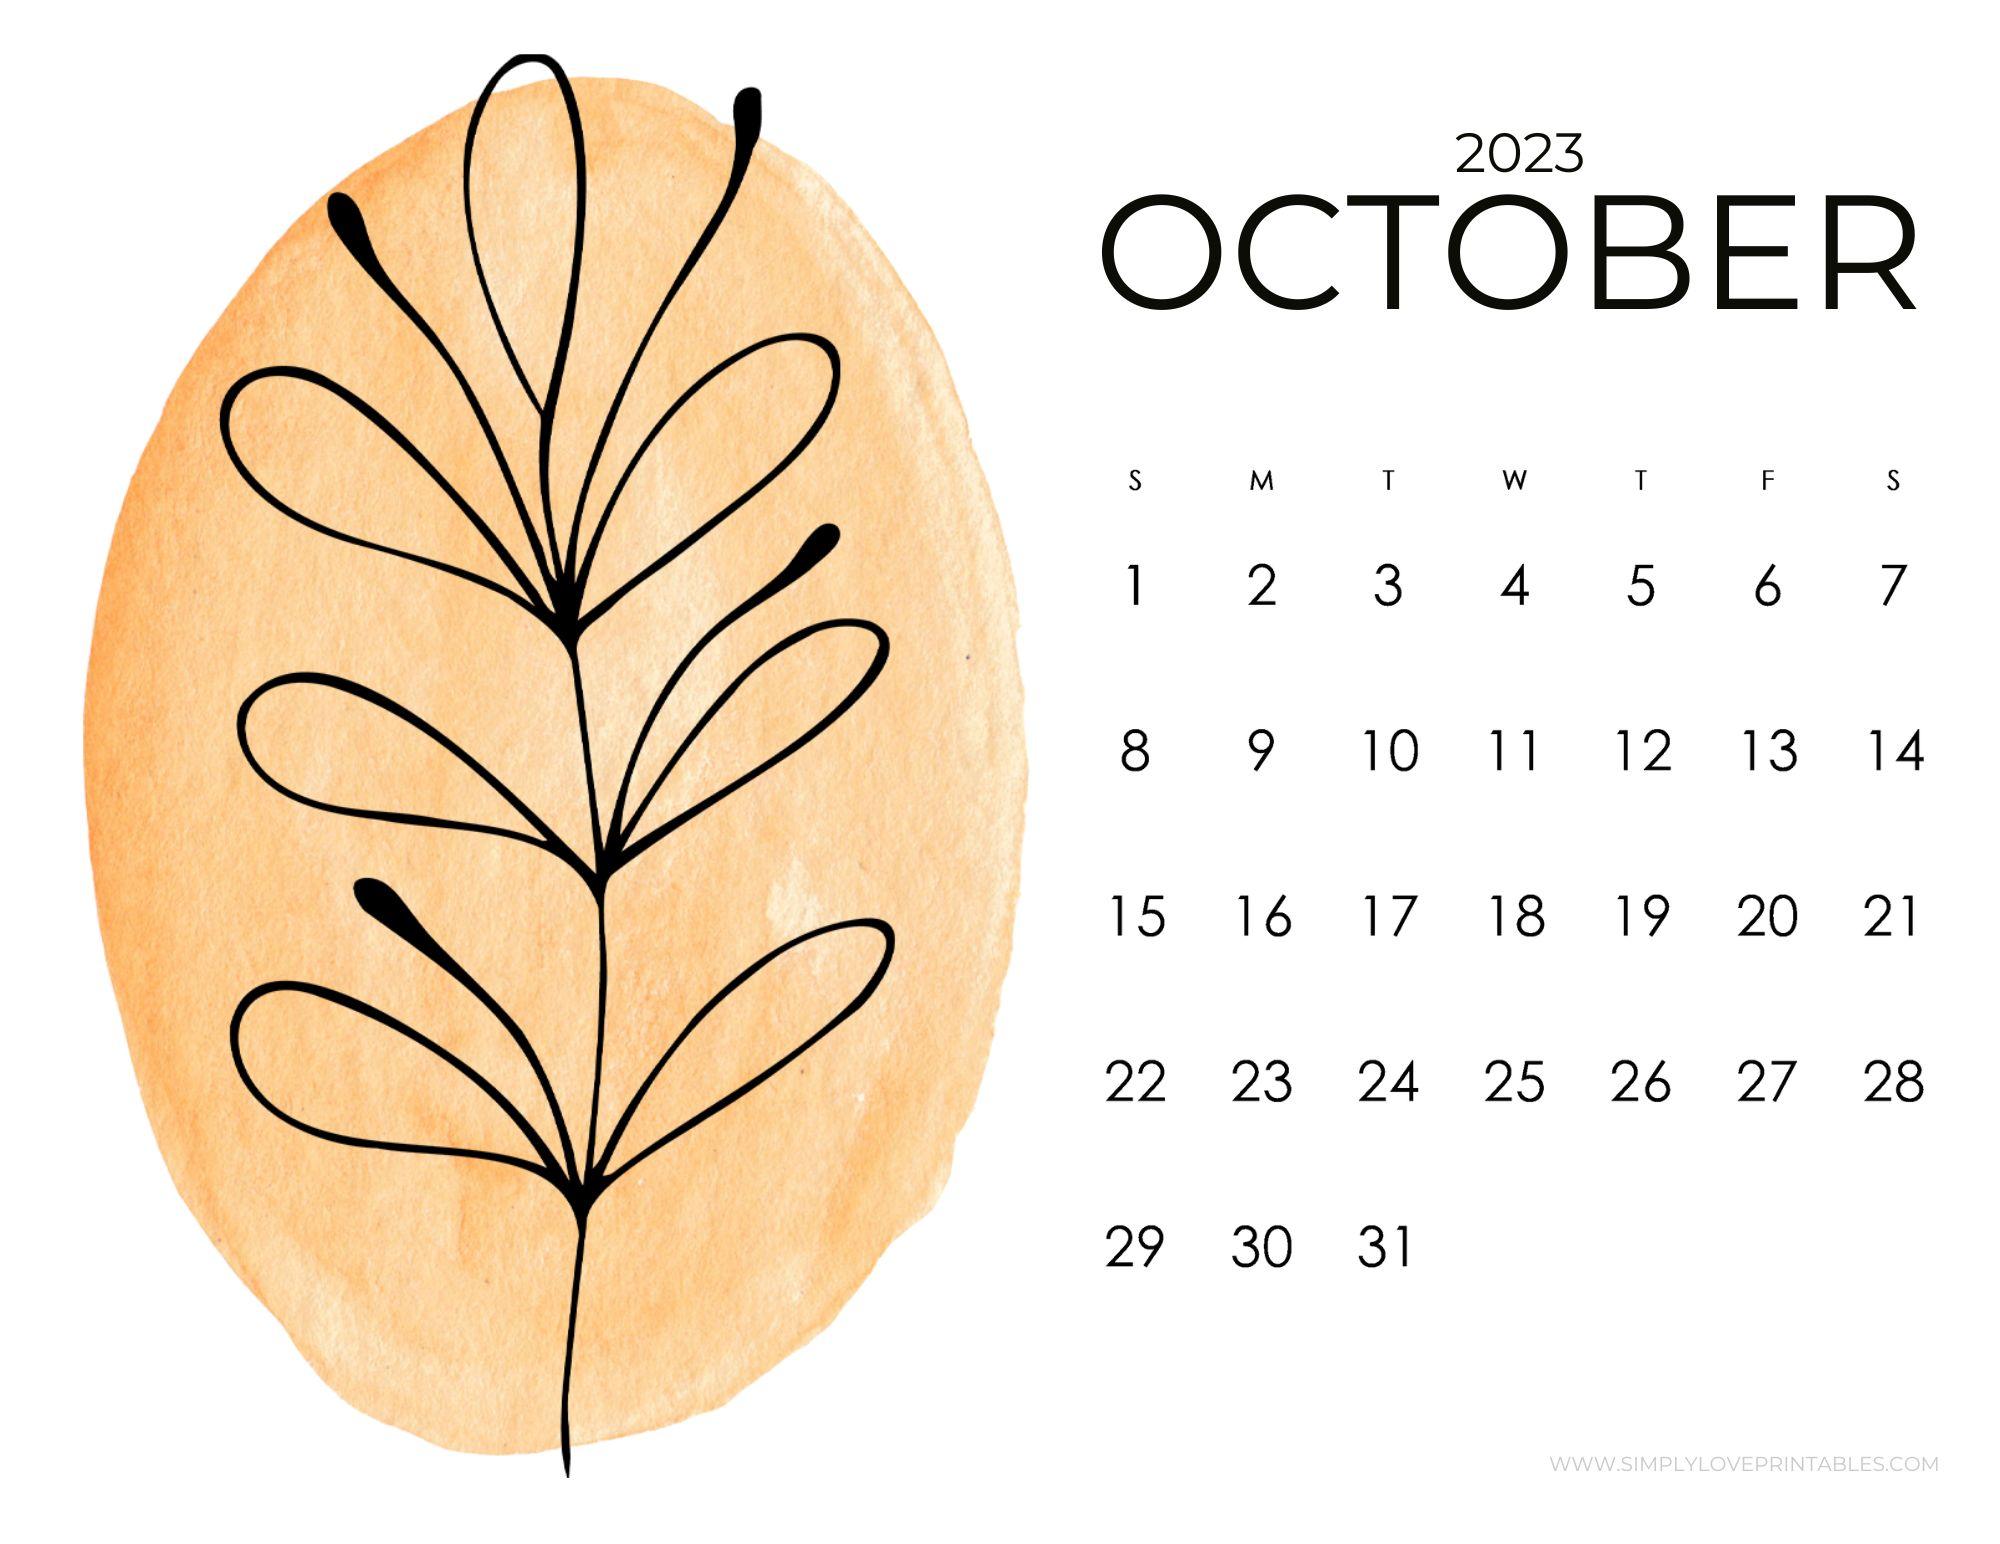 October Calendars Simply Love Printables